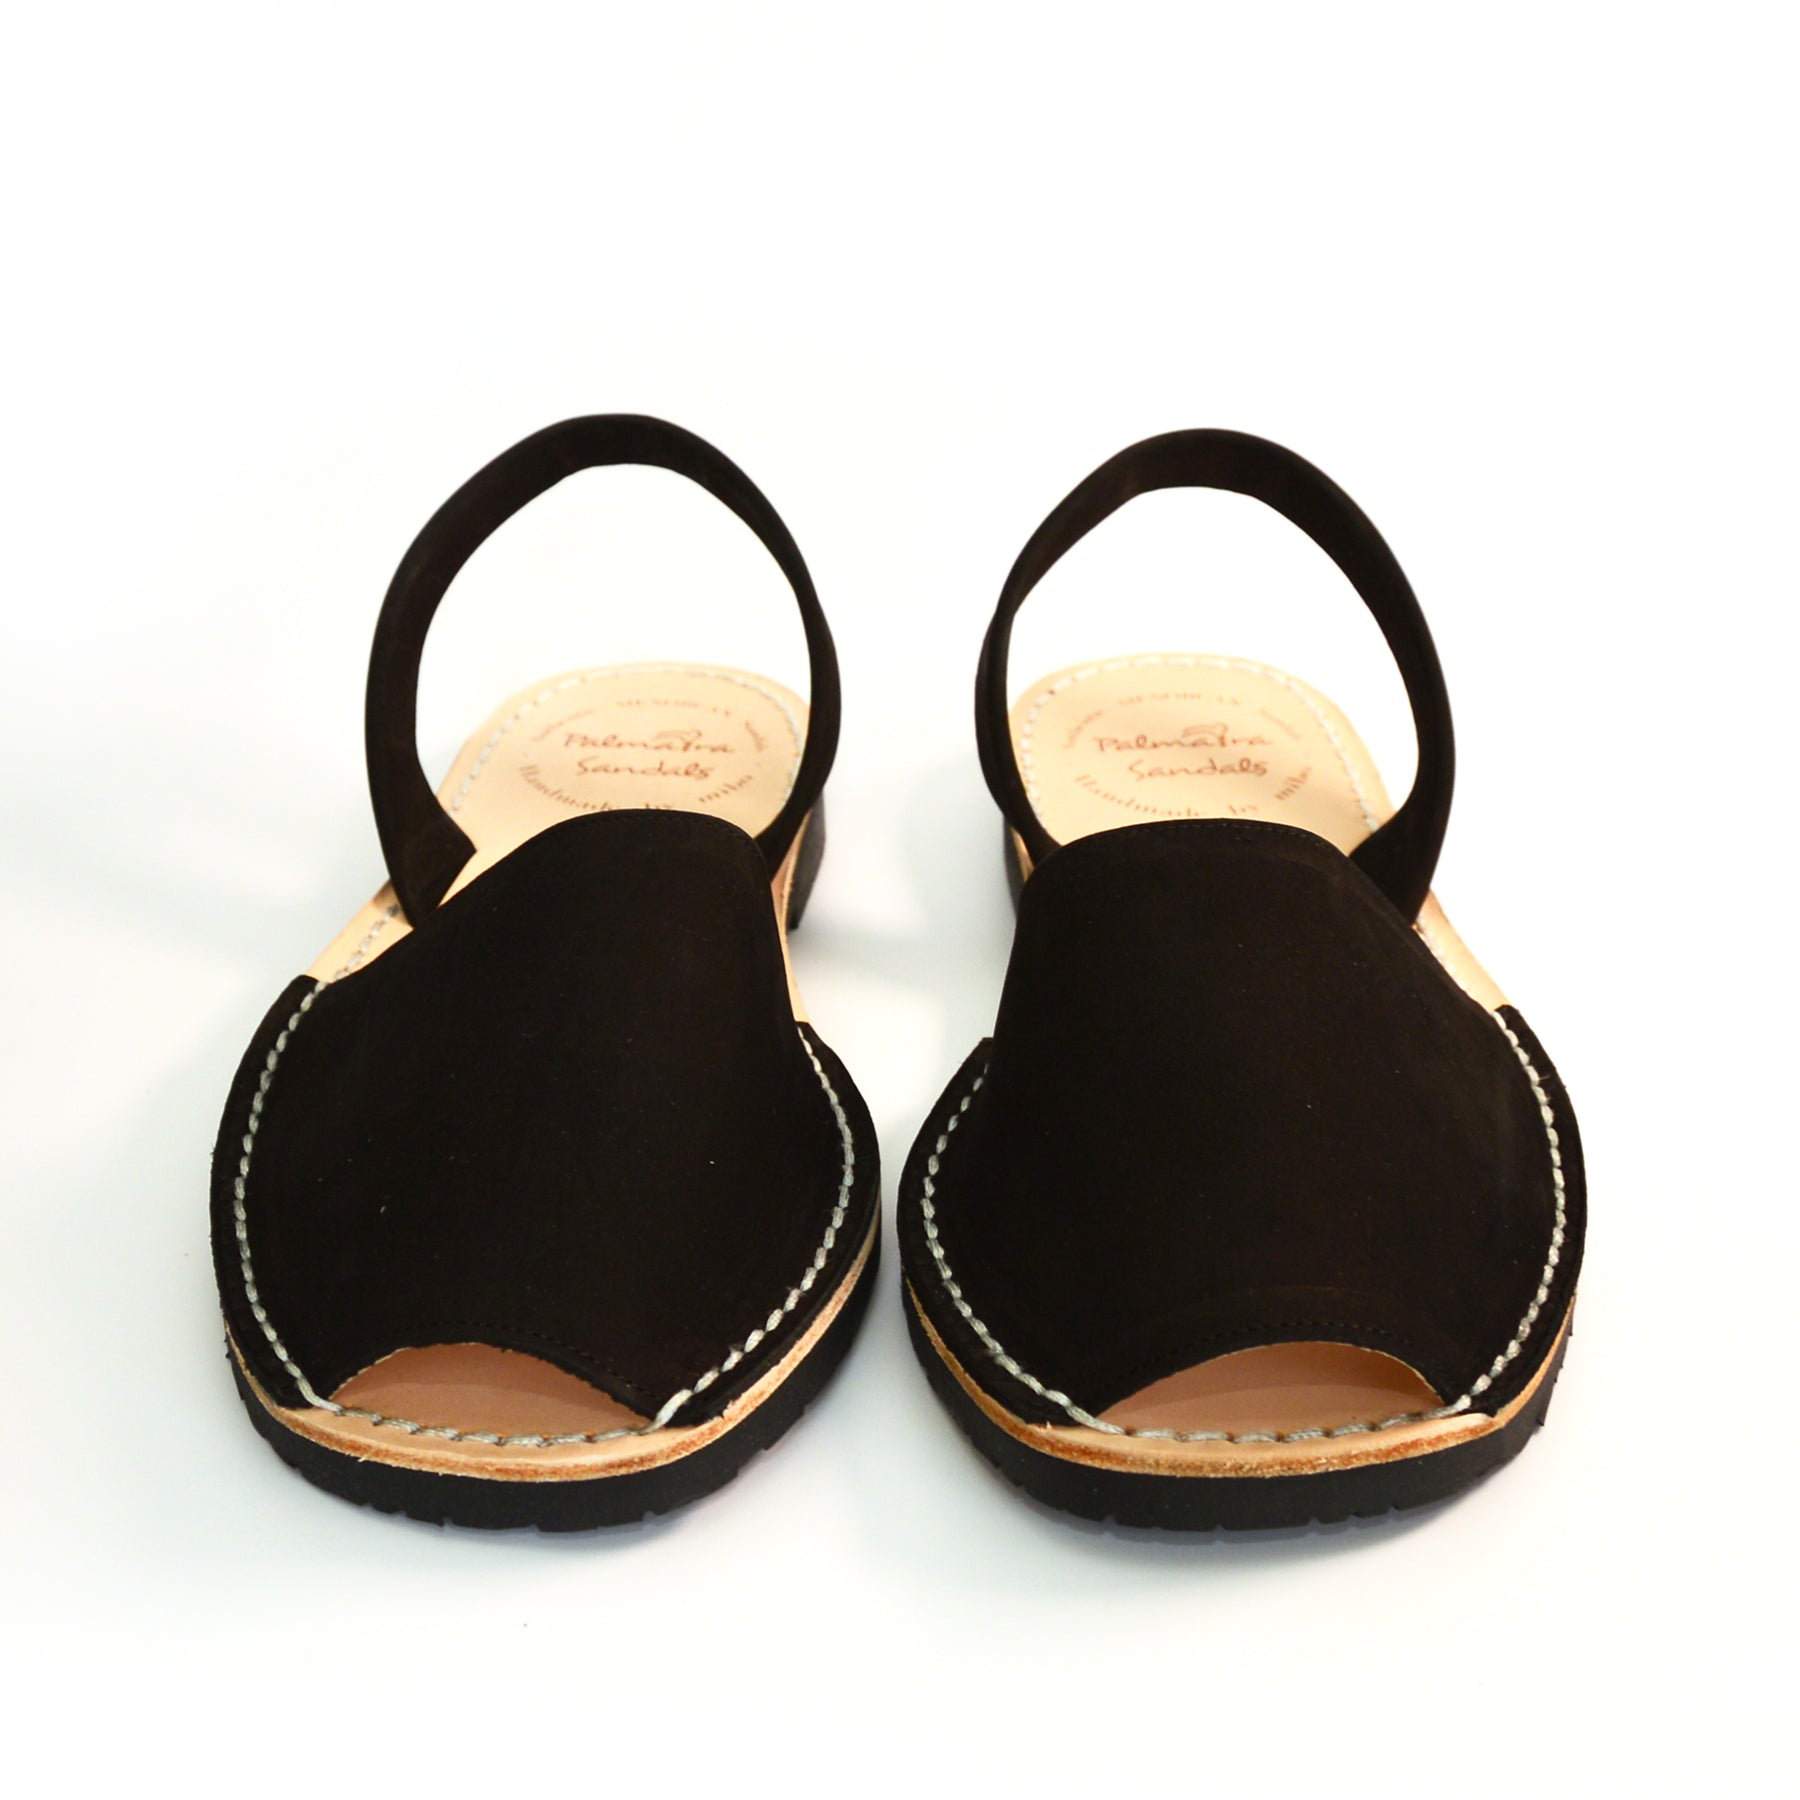 Mens black nubuck avarcas menorcan sandals